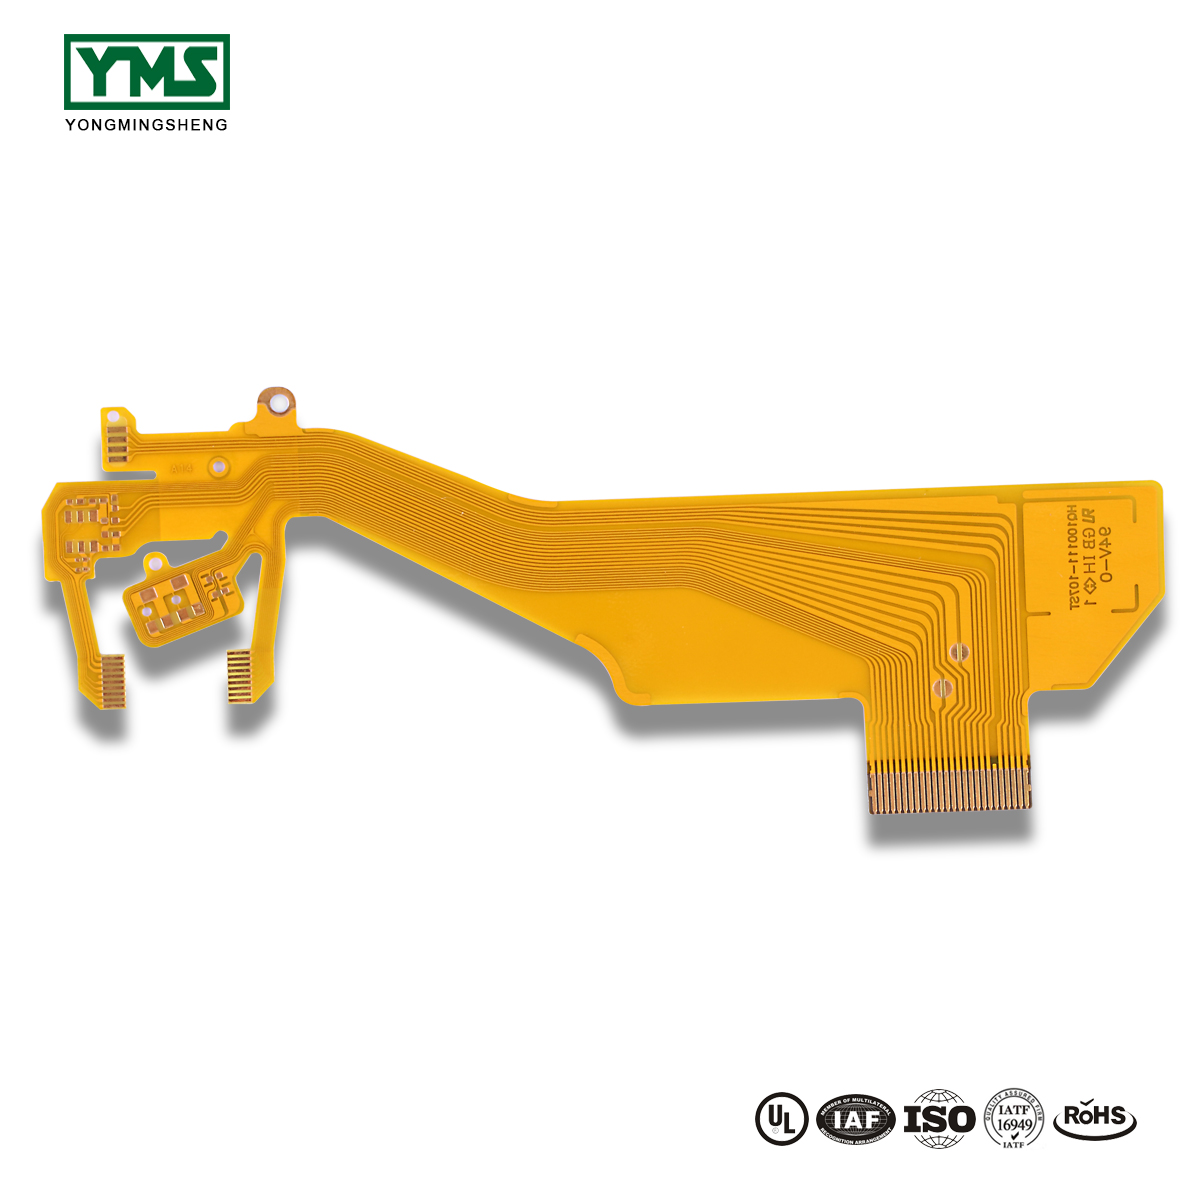 OEM/ODM Factory Cem-3 - 2Layer Flexible Board | YMSPCB – Yongmingsheng